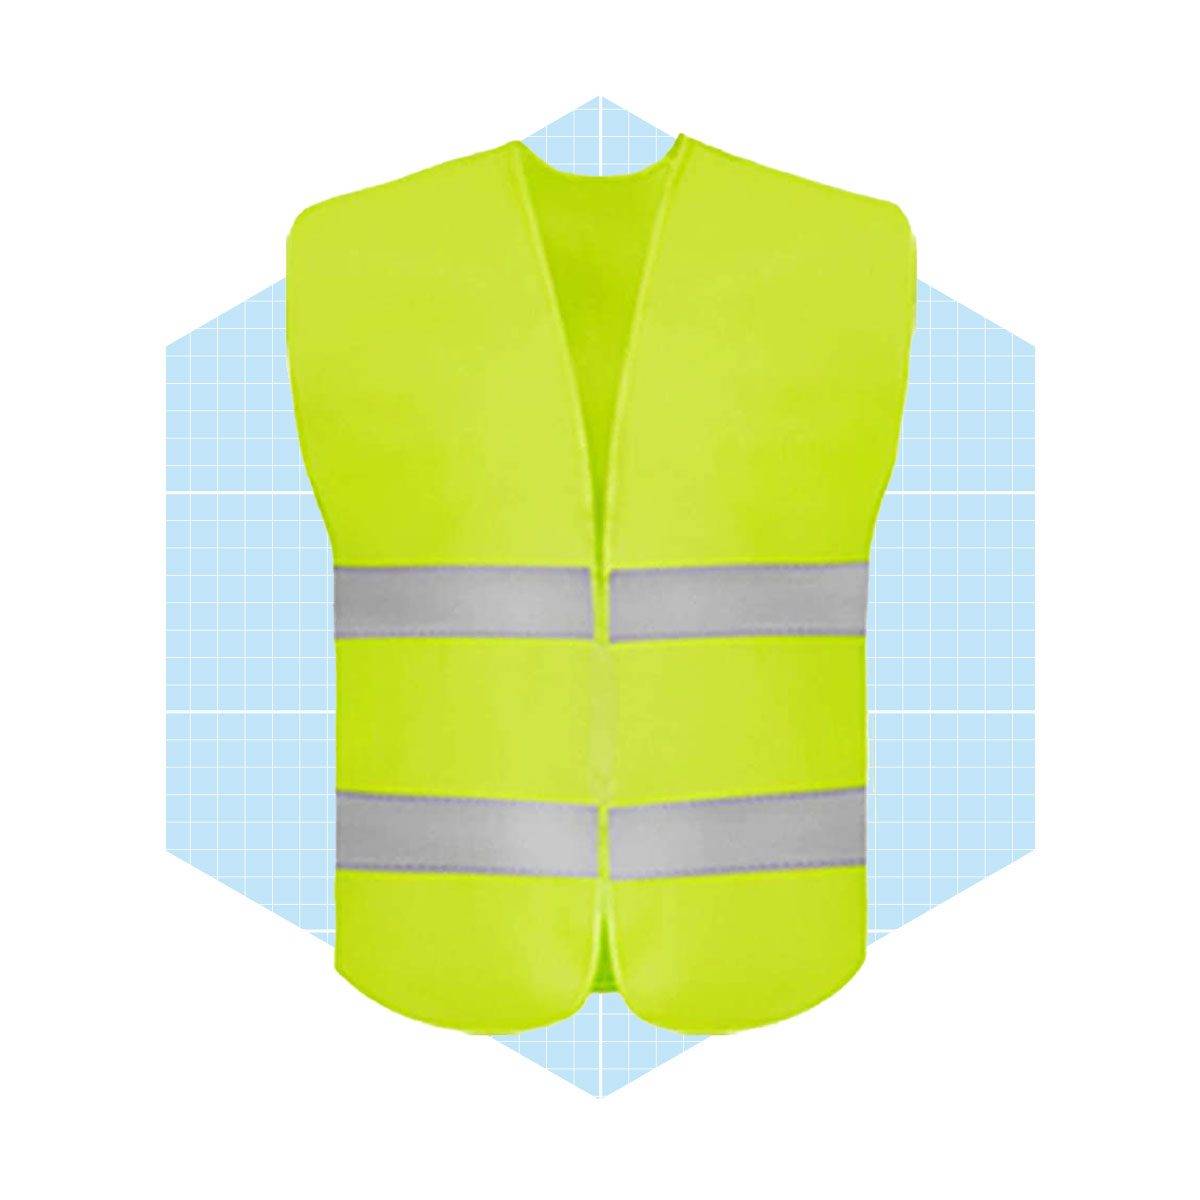 Duskove Class 1 Reflective Safety Vest Ecomm Via Amazon